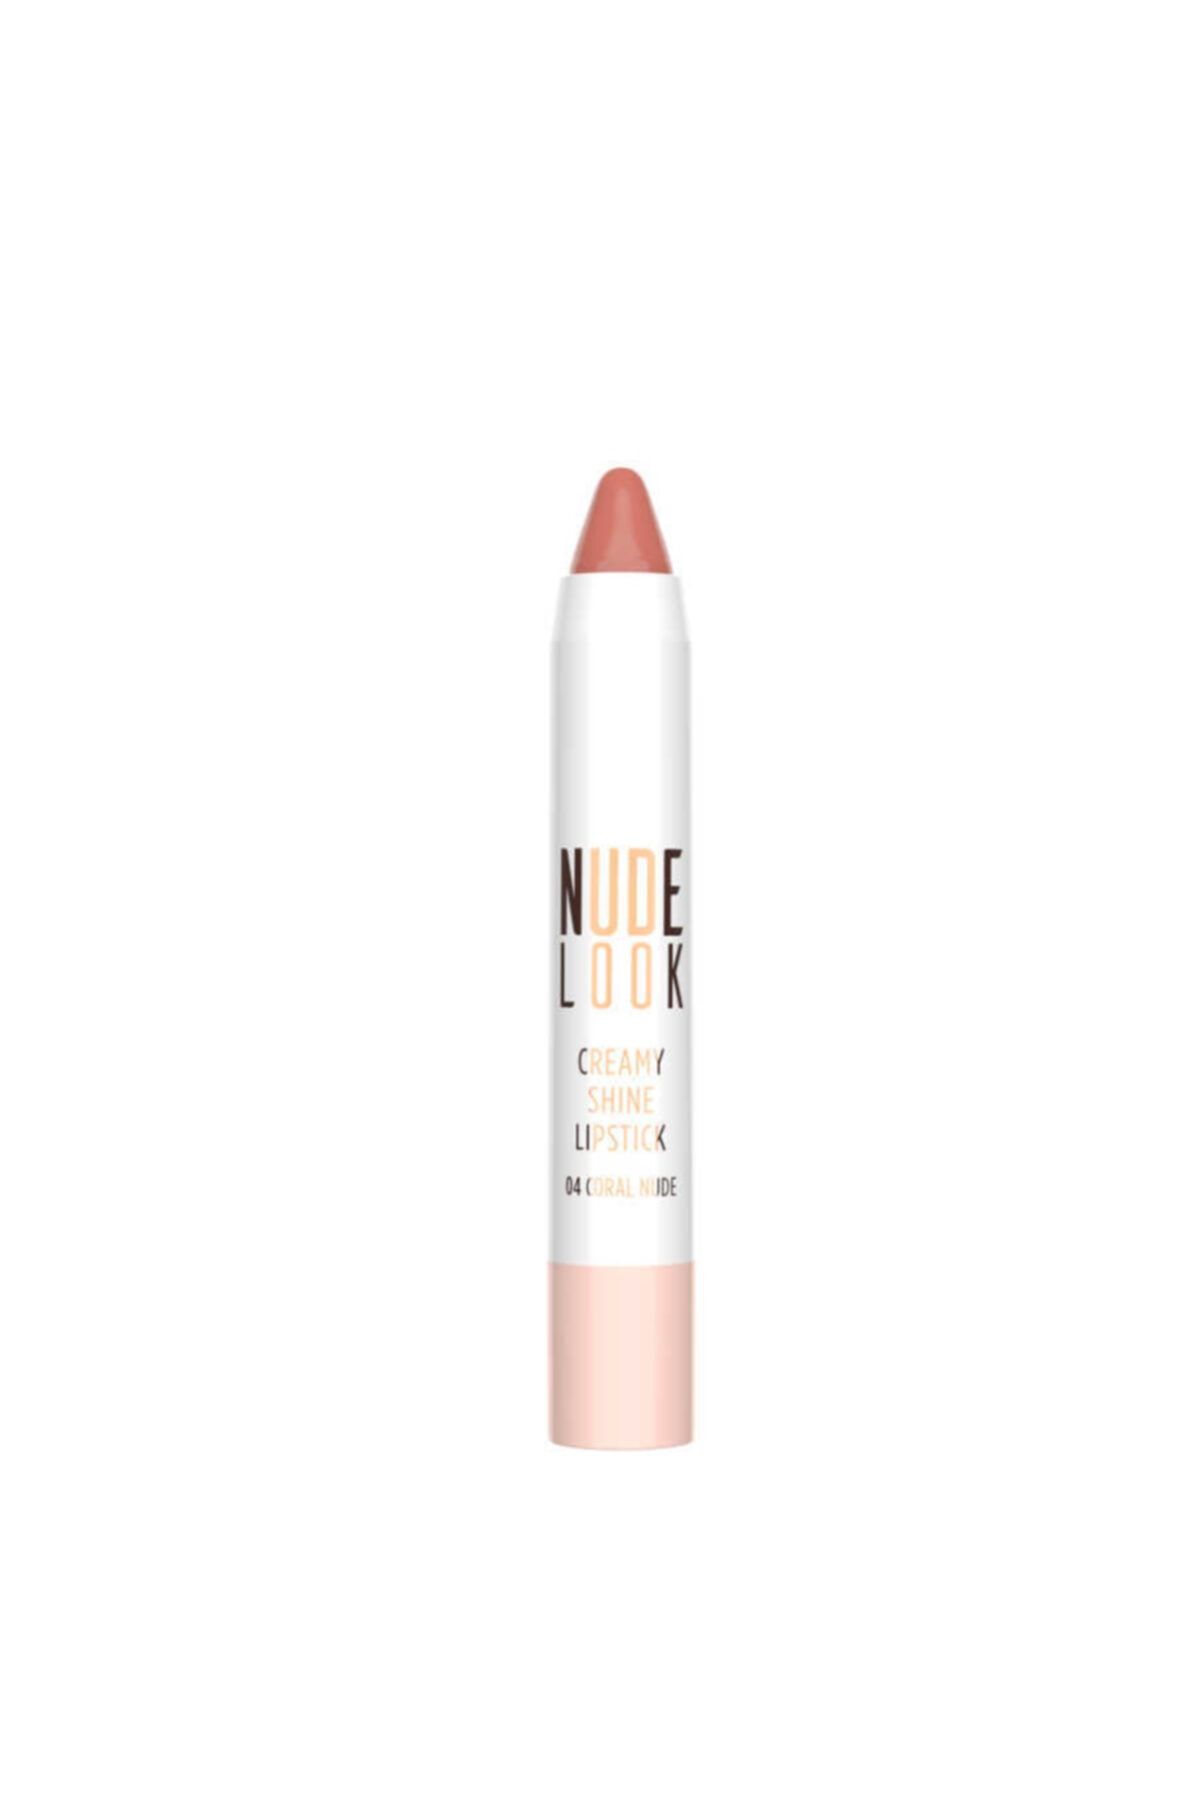 Golden Rose Nude Look Creamy Shine Lipstick No: 04 Coral Nude